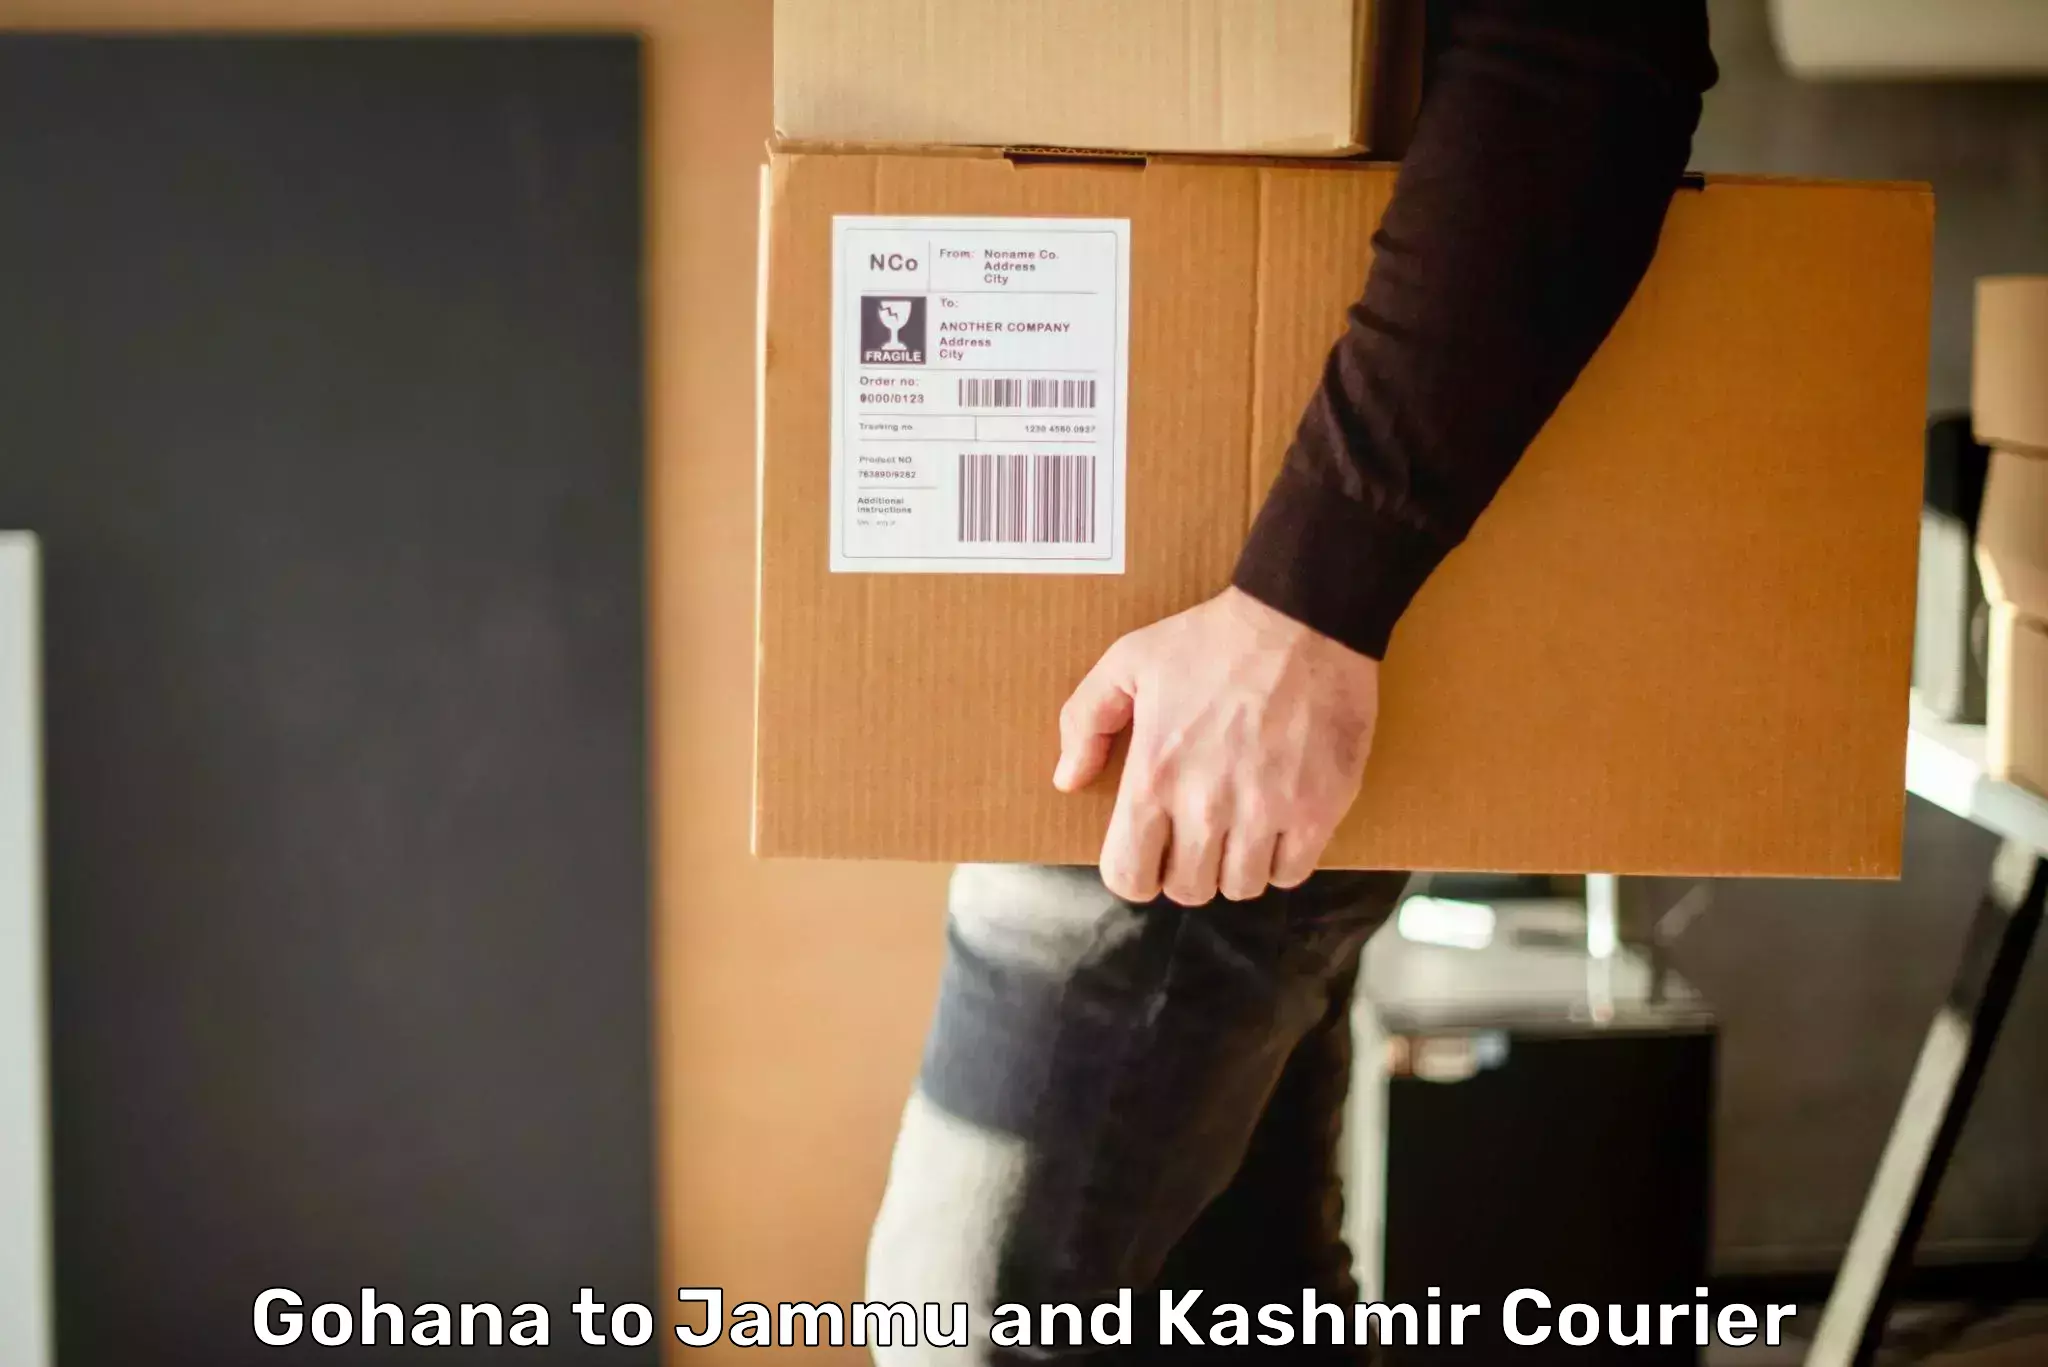 Courier service booking Gohana to Jammu and Kashmir